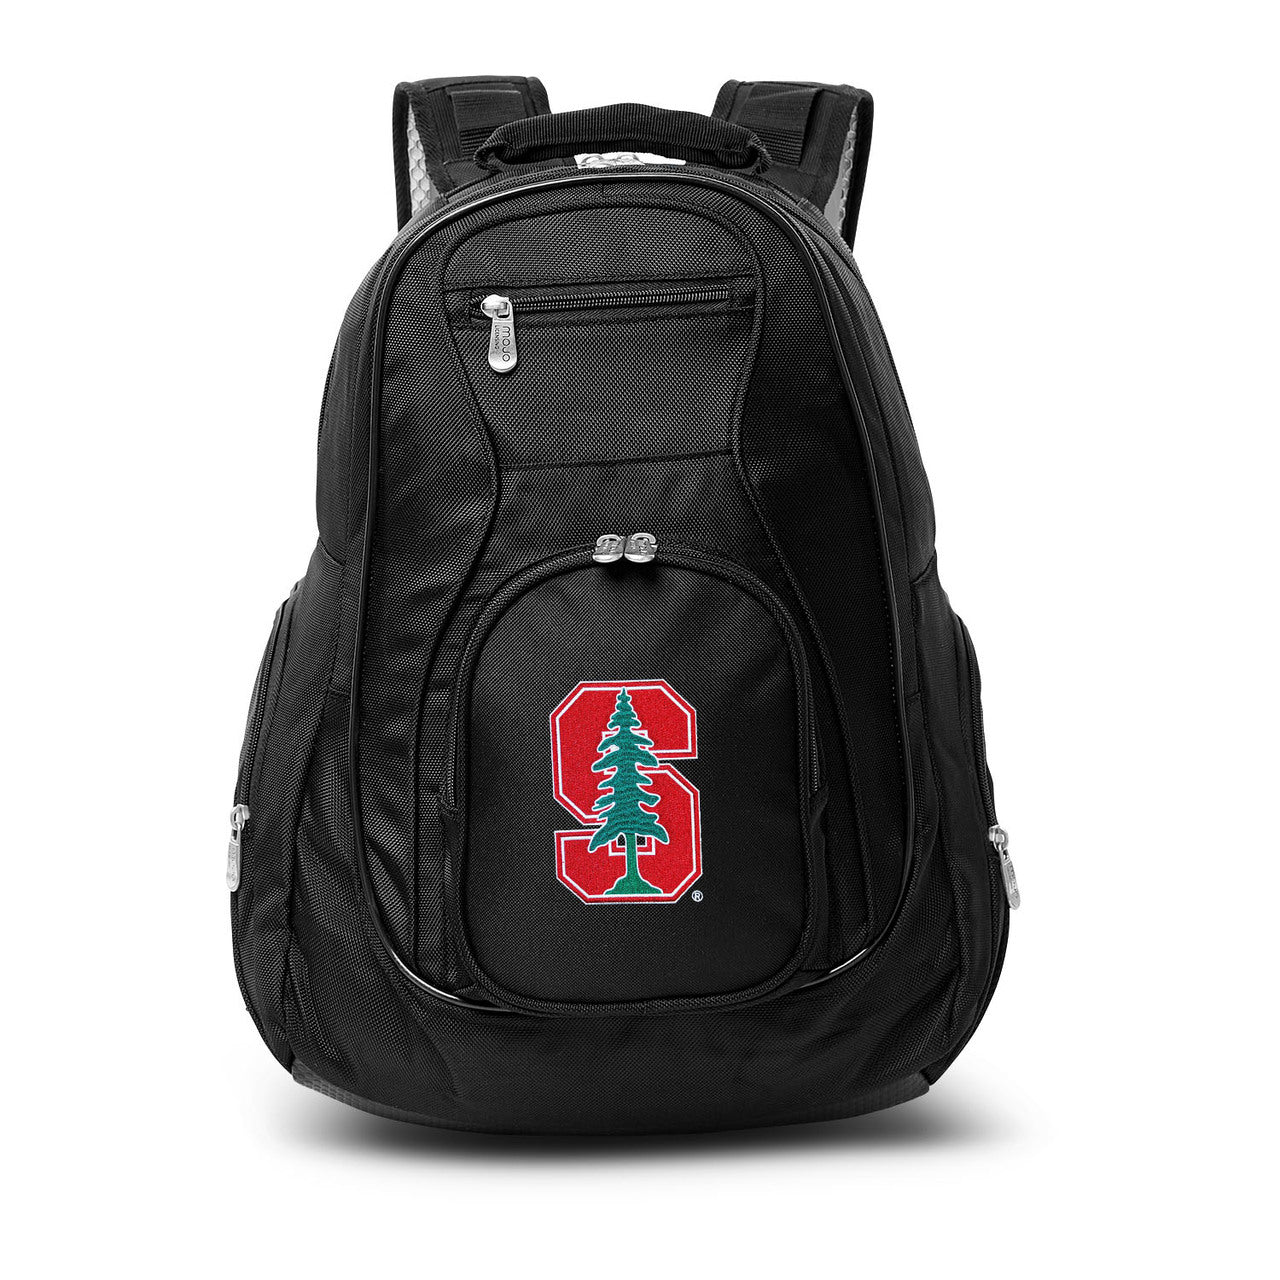 Stanford Cardinal Laptop Backpack Black